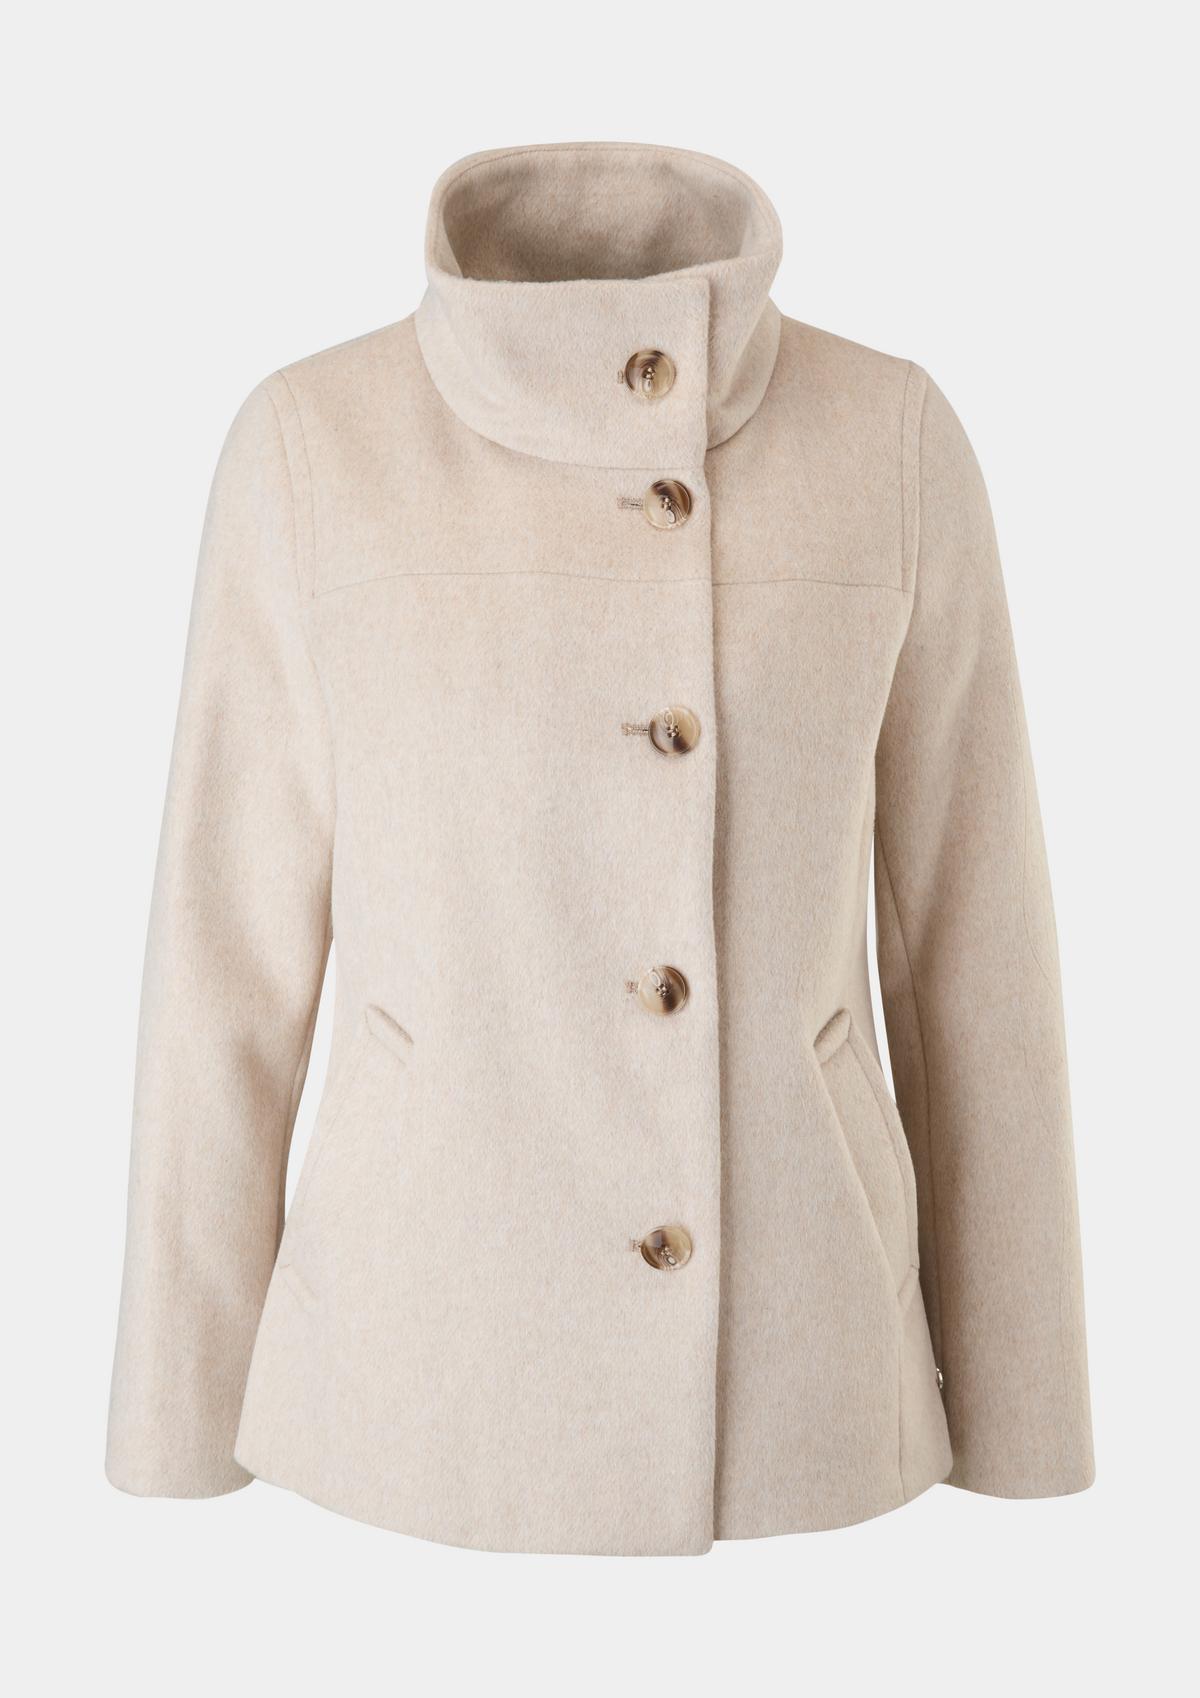 Wool coat with a high collar - navy | Ketten ohne Anhänger